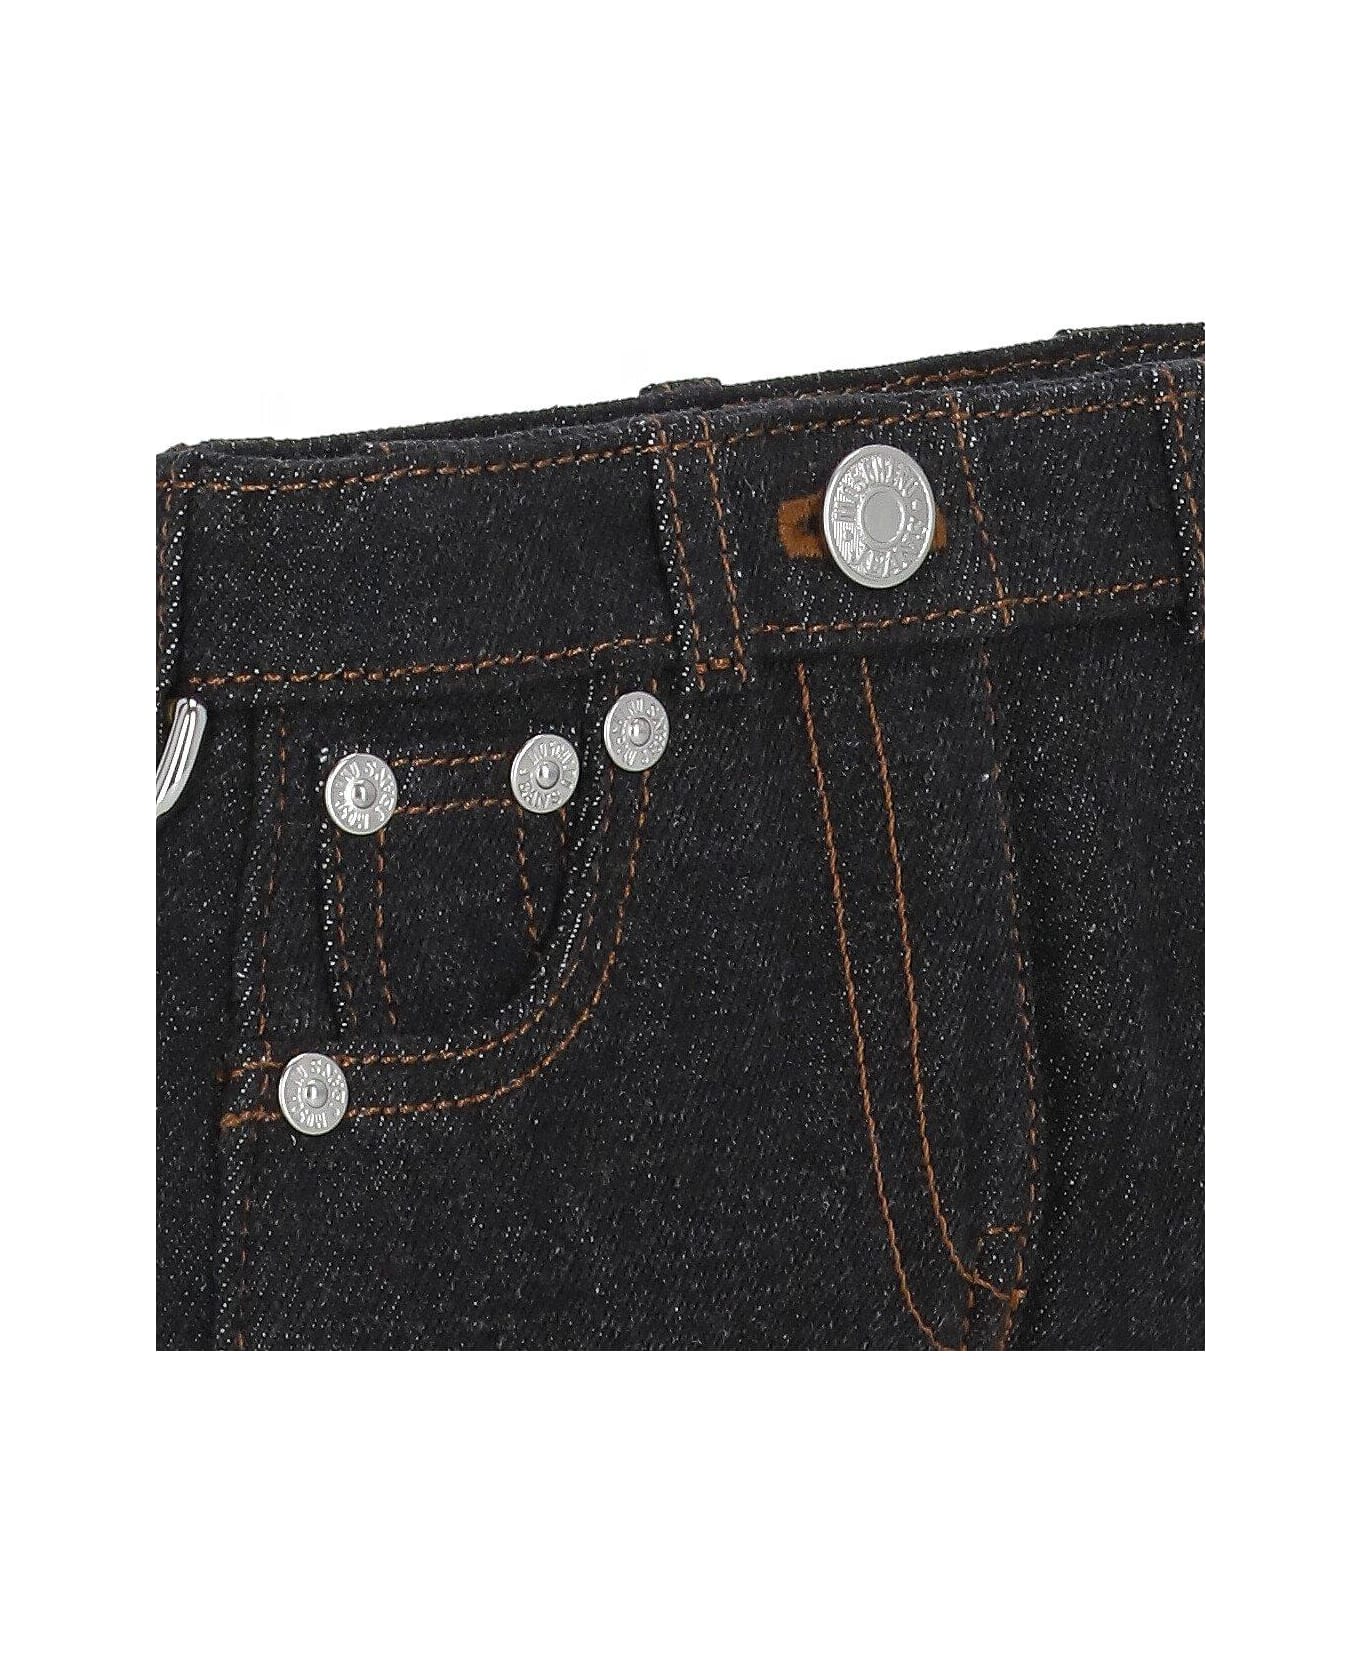 M05CH1N0 Jeans Jeans Denim Clutch Bag - BLACK